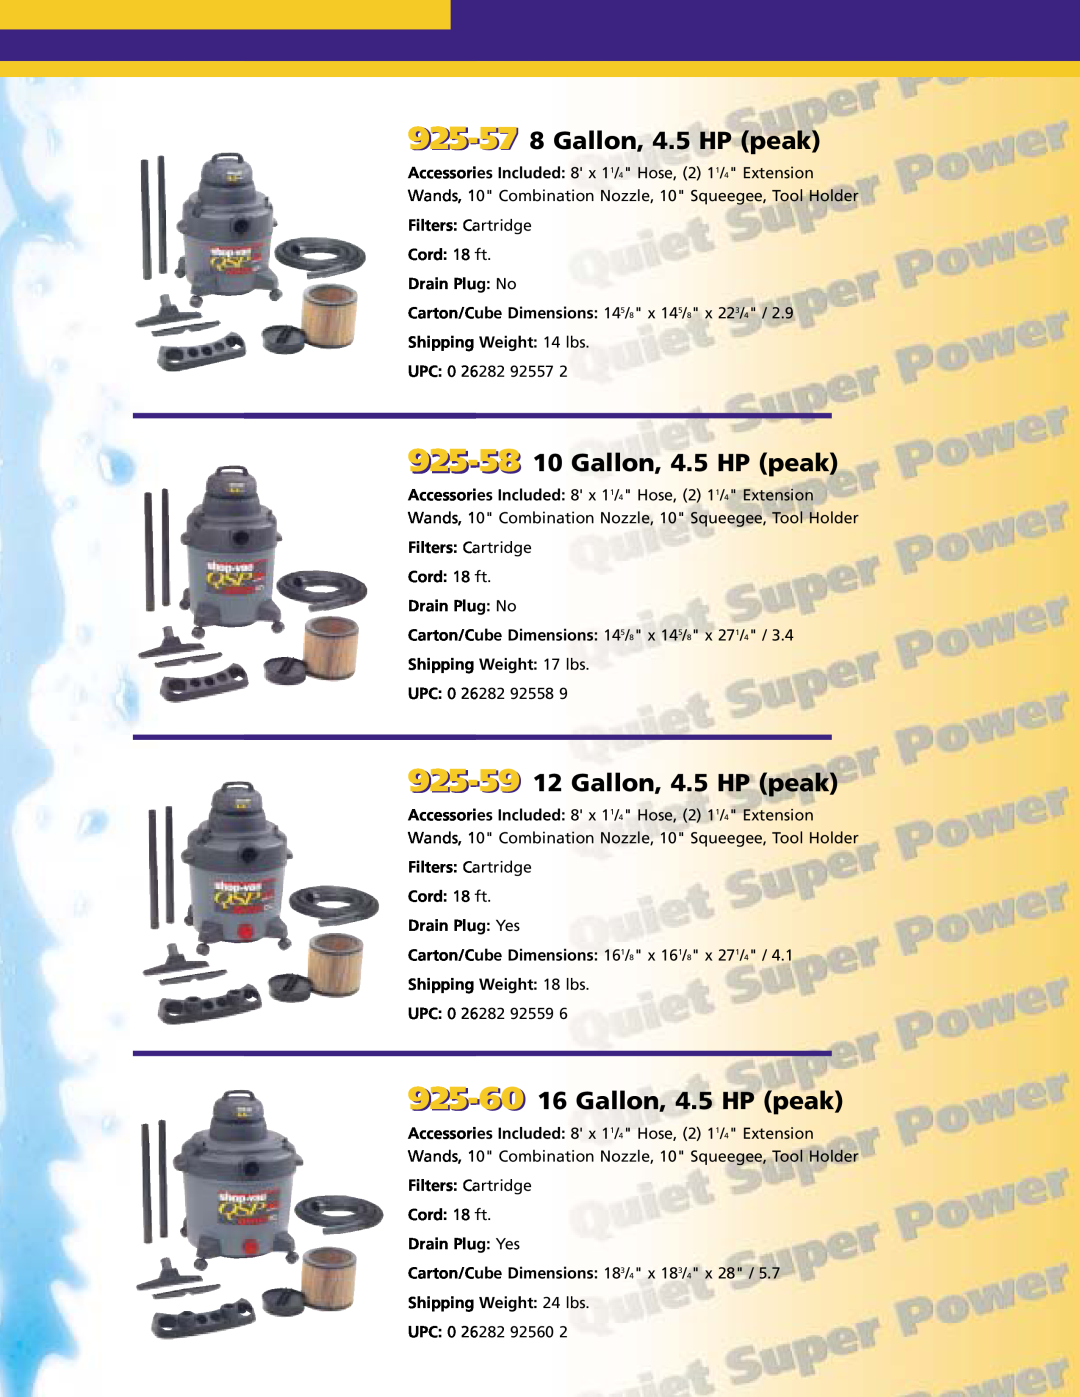 Shop-Vac QSP Series manual 925-57 8 Gallon, 4.5 HP peak, 925-58 10 Gallon, 4.5 HP peak, 925-59 12 Gallon, 4.5 HP peak 